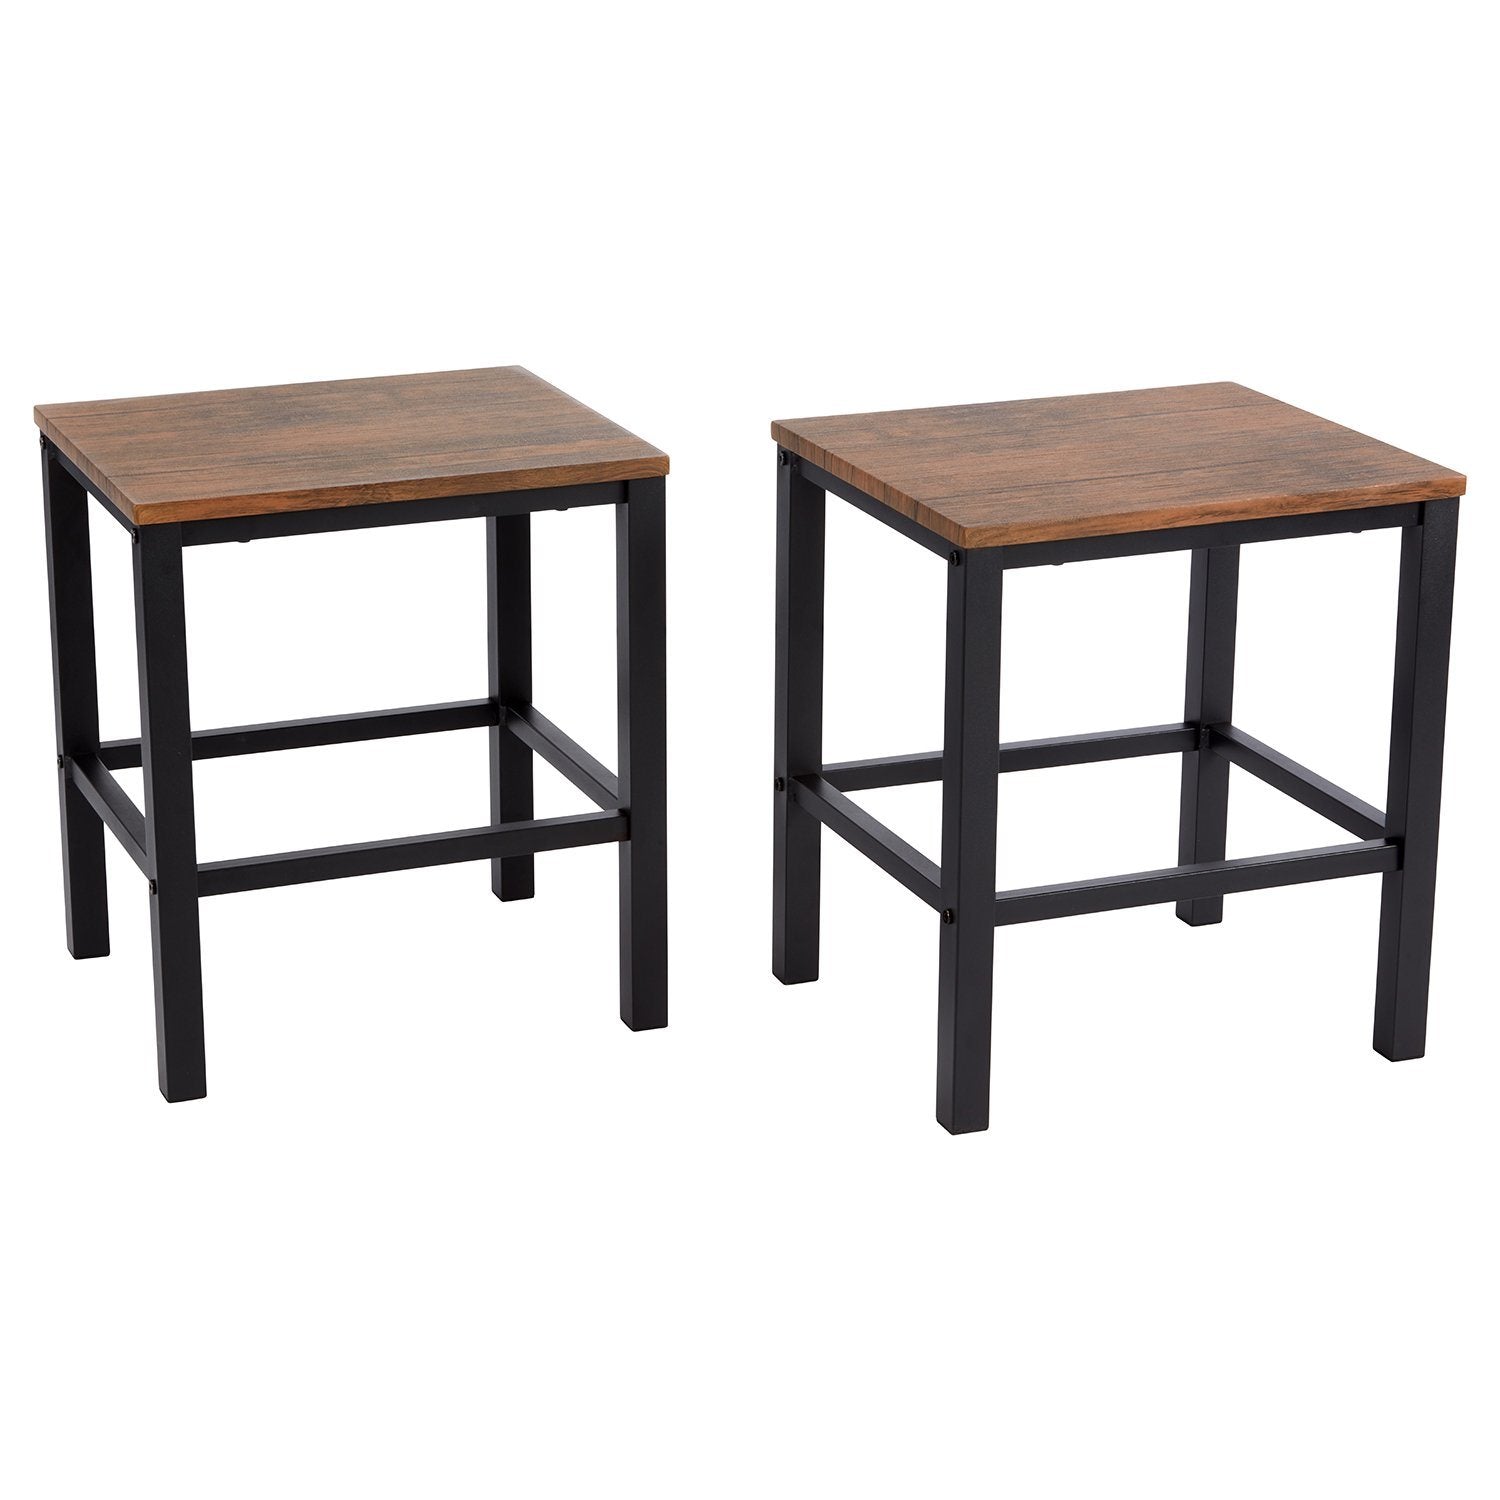 Sheffield stools - Set of 2 – industrial - Laura James